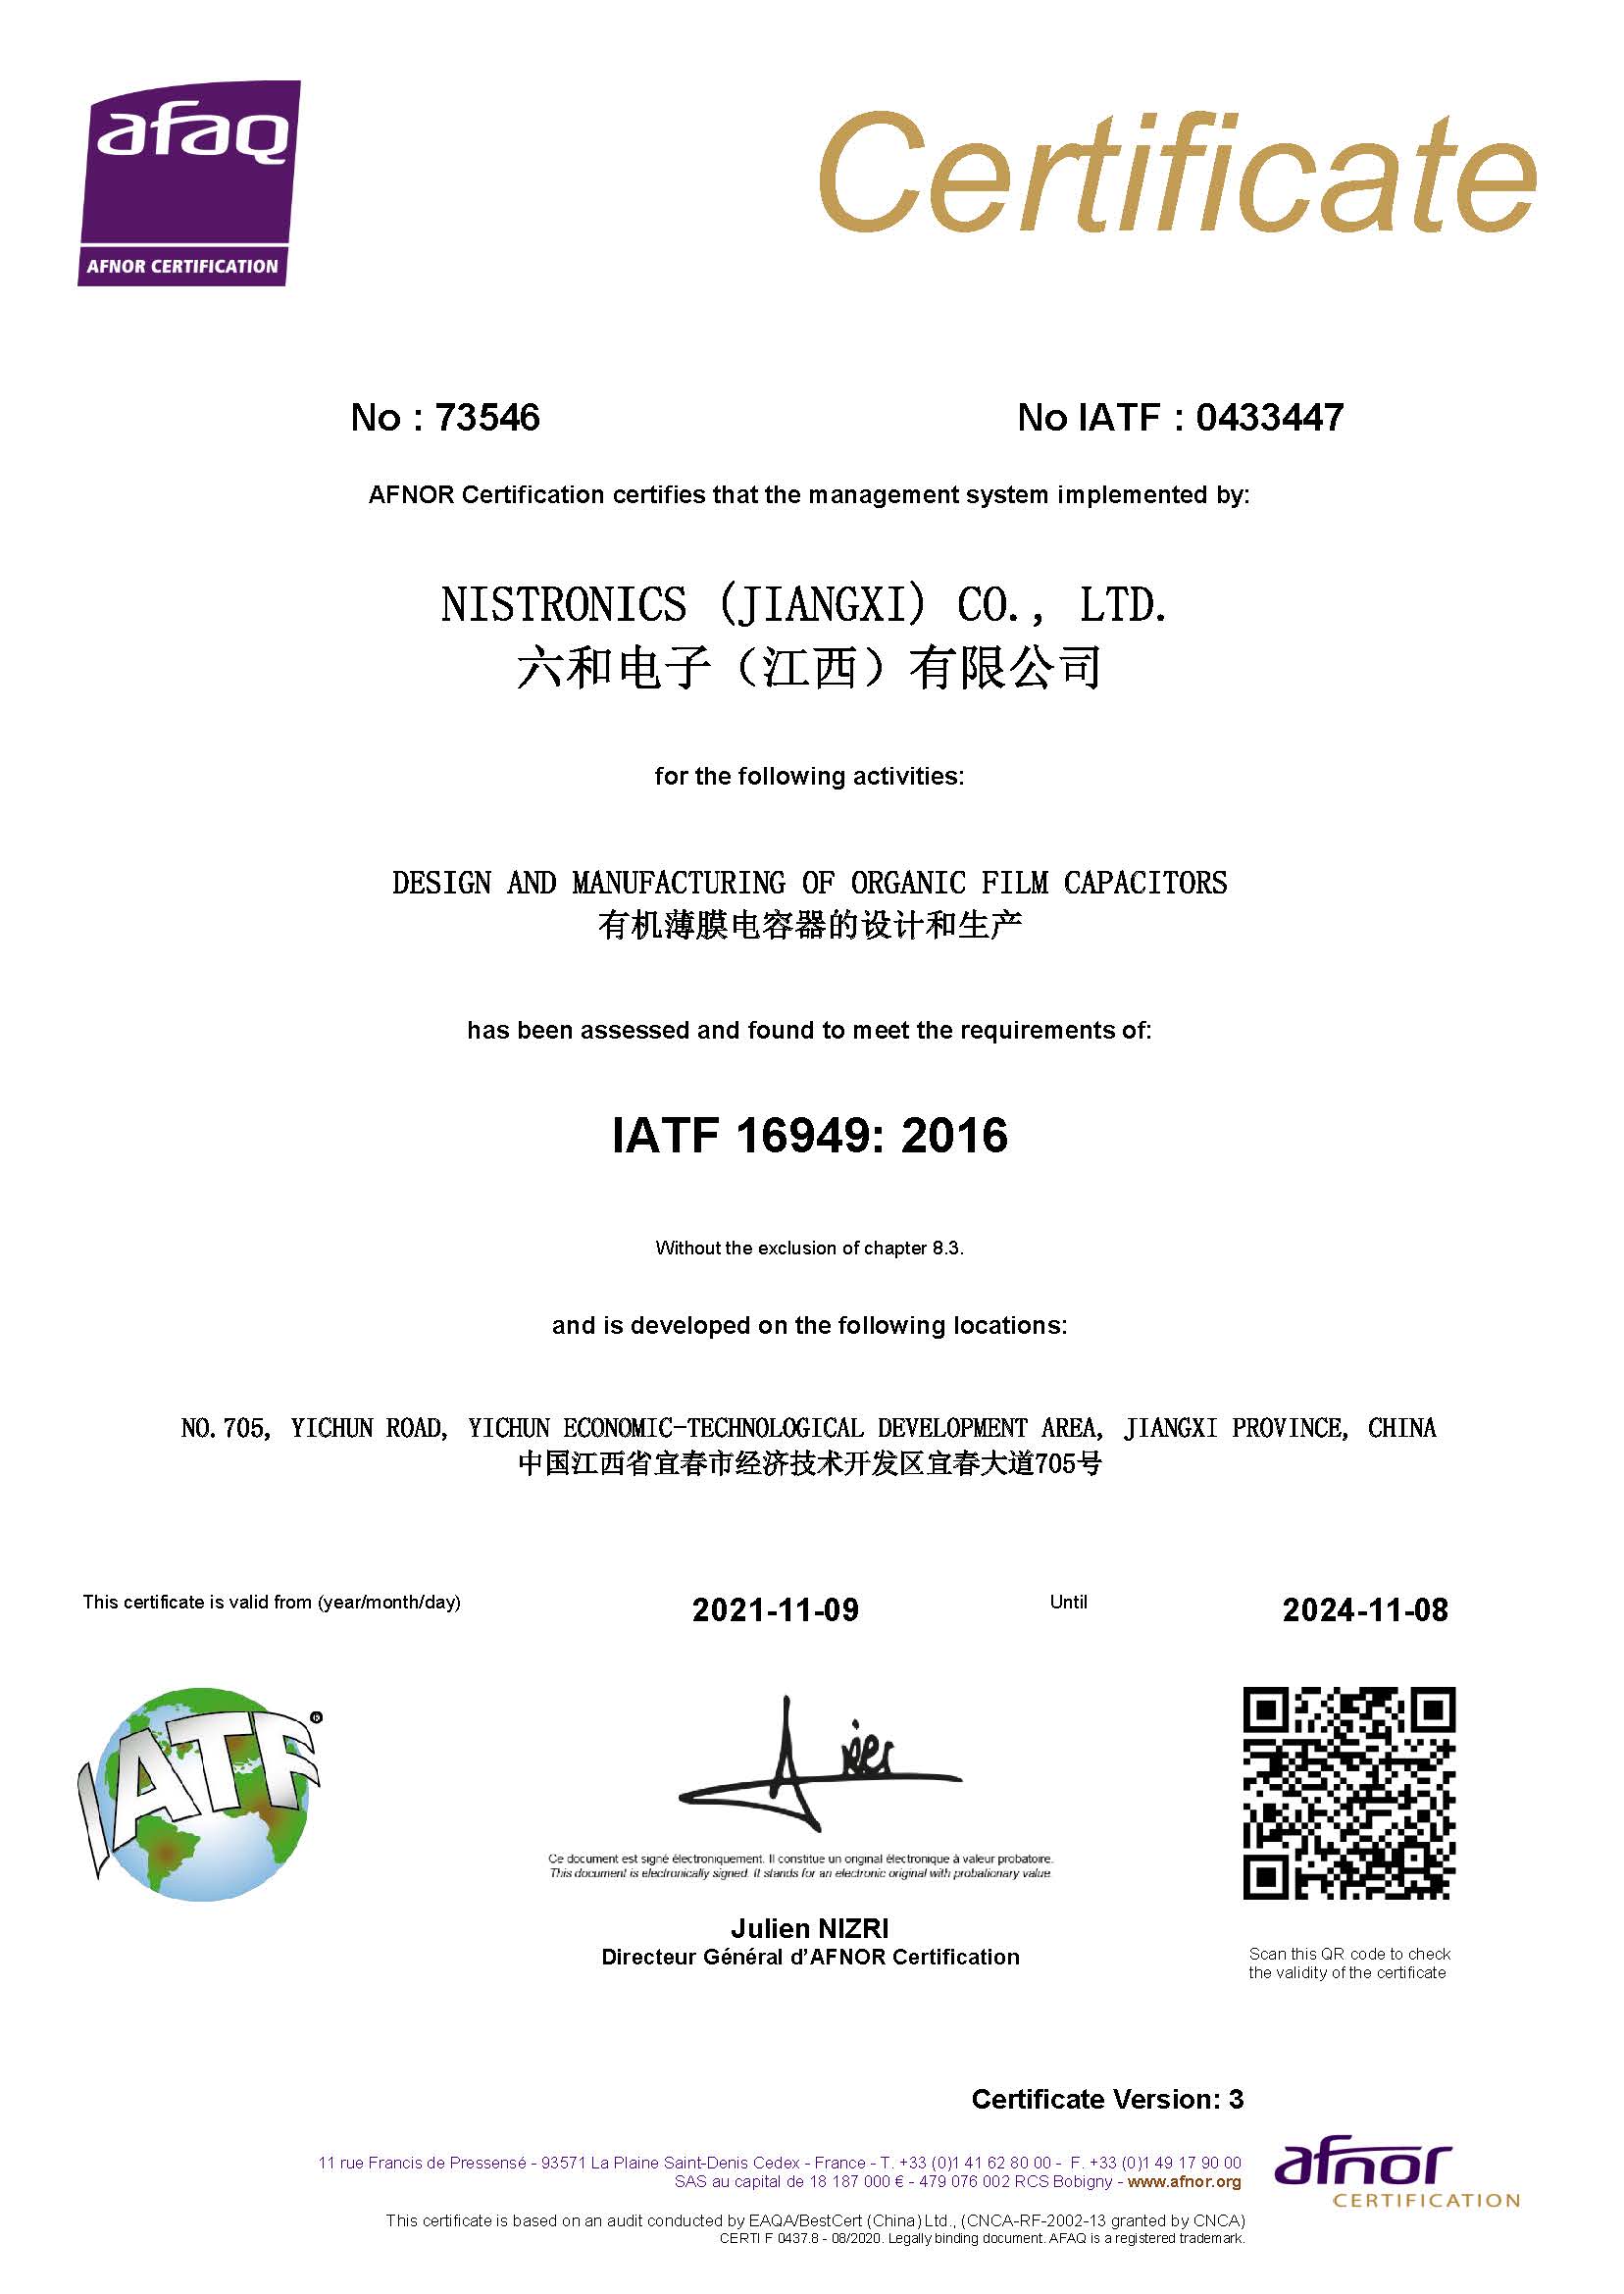 IATF16949 Certificate 2021